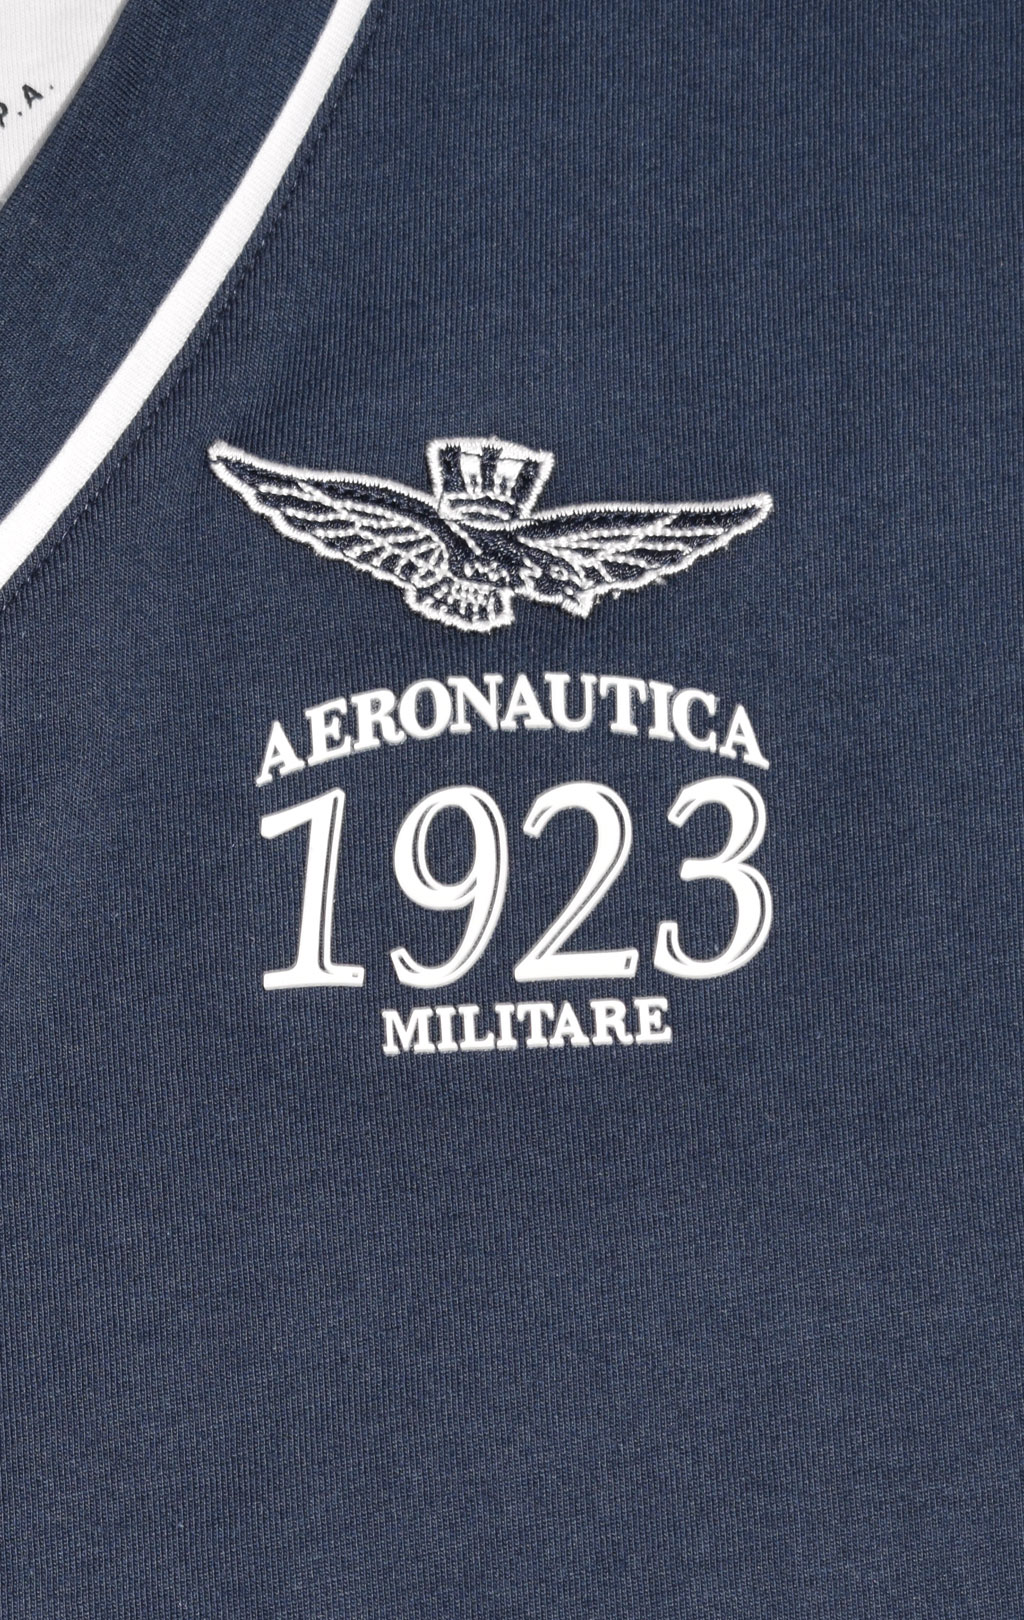 Женская футболка AERONAUTICA MILITARE SS 22/TR blue navy (TS 1982) 